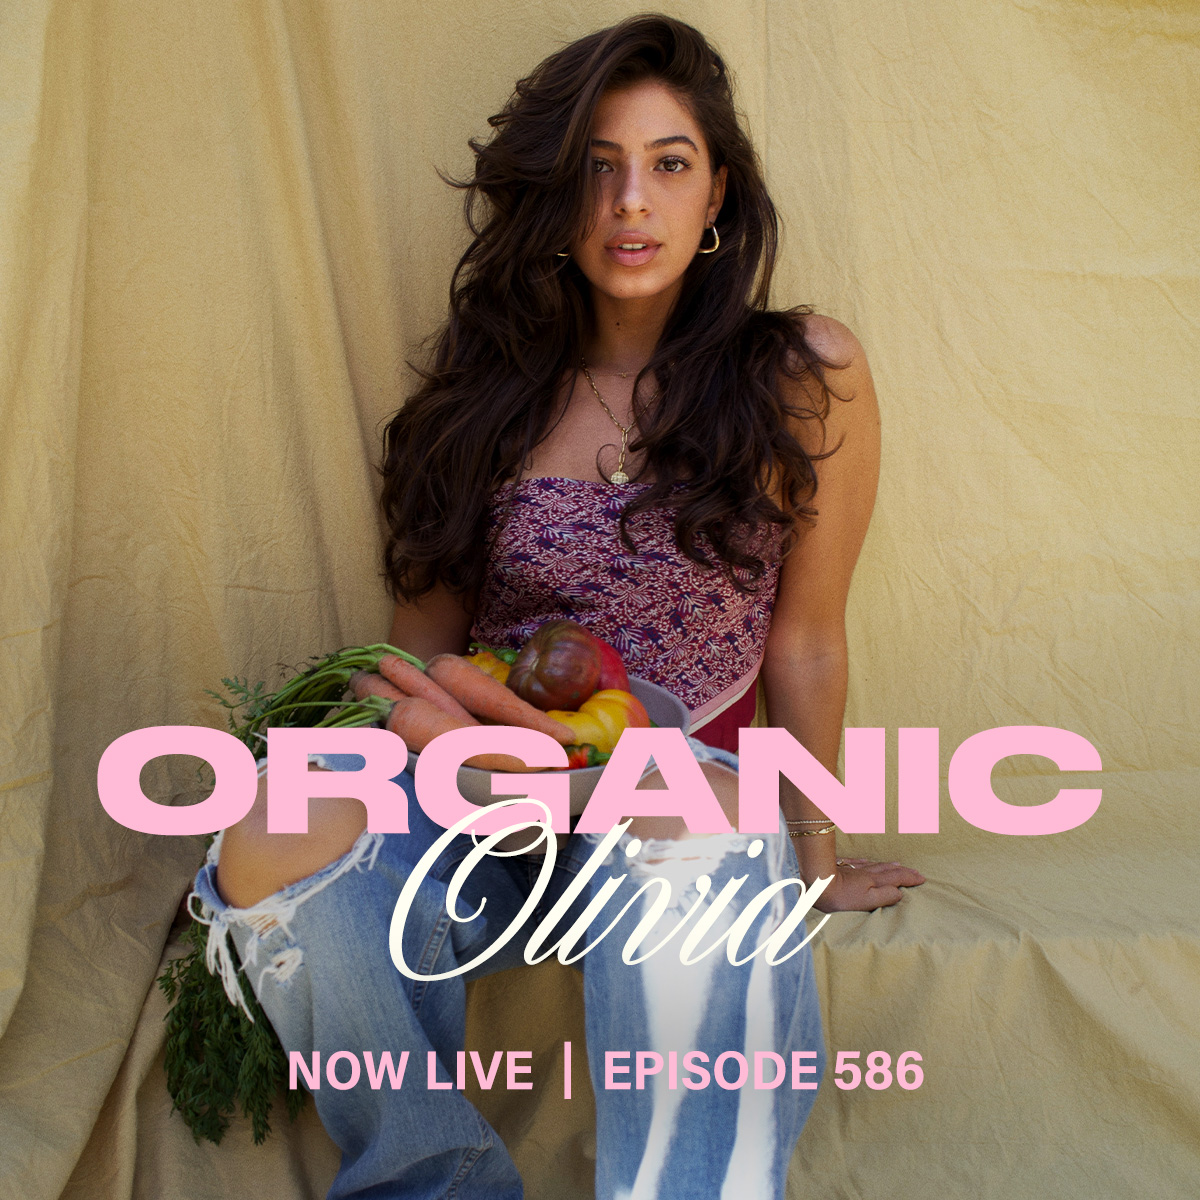 Organic Olivia